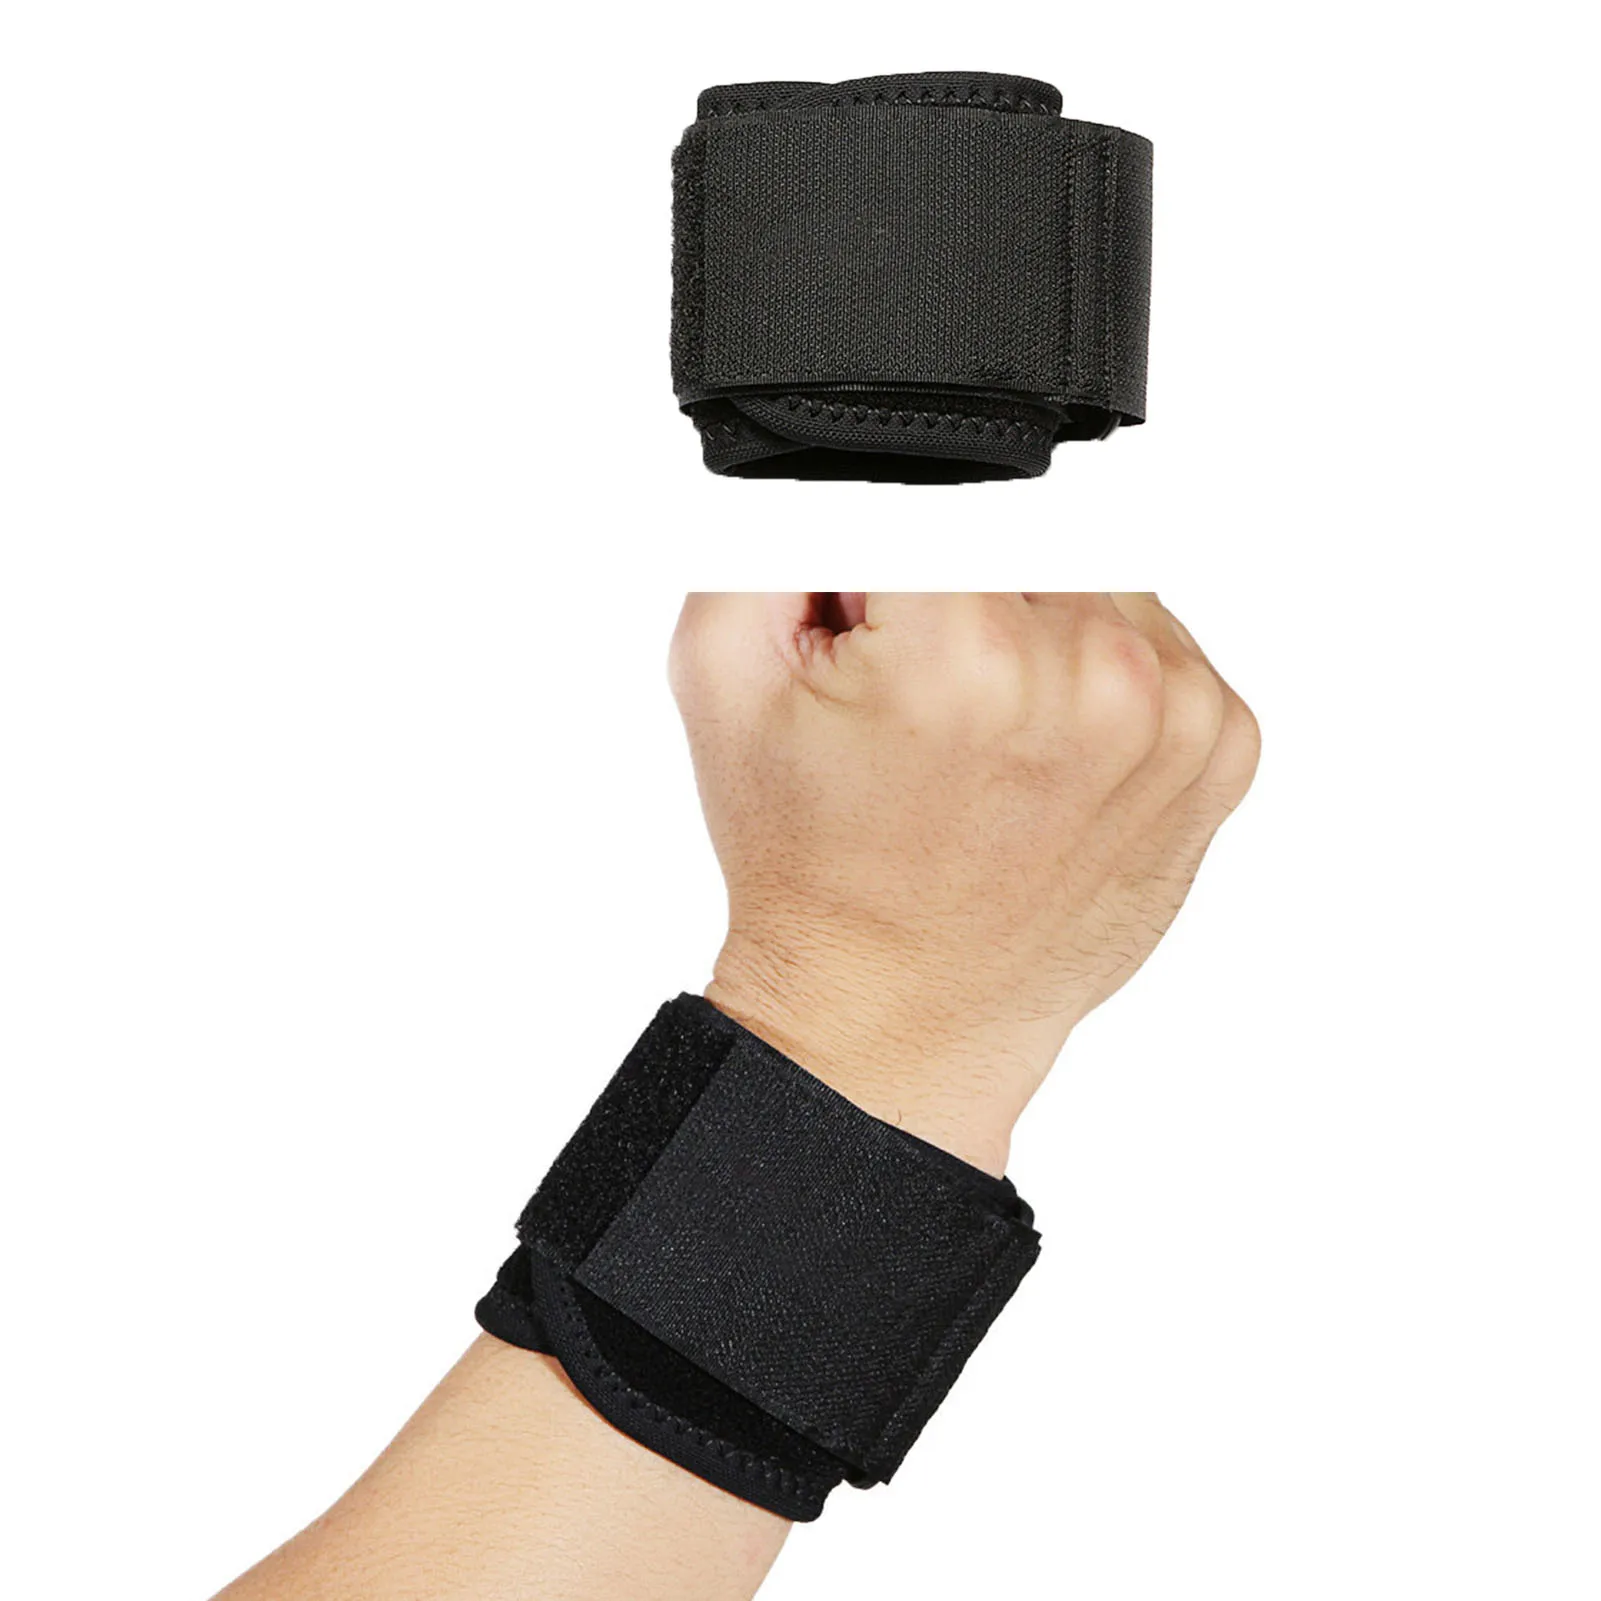 

Wrist Brace Band Adjustable Wrist Support Brace Wrist Compression Sleeve Wrist Band Wraps Guards Flexible Highly Elastic